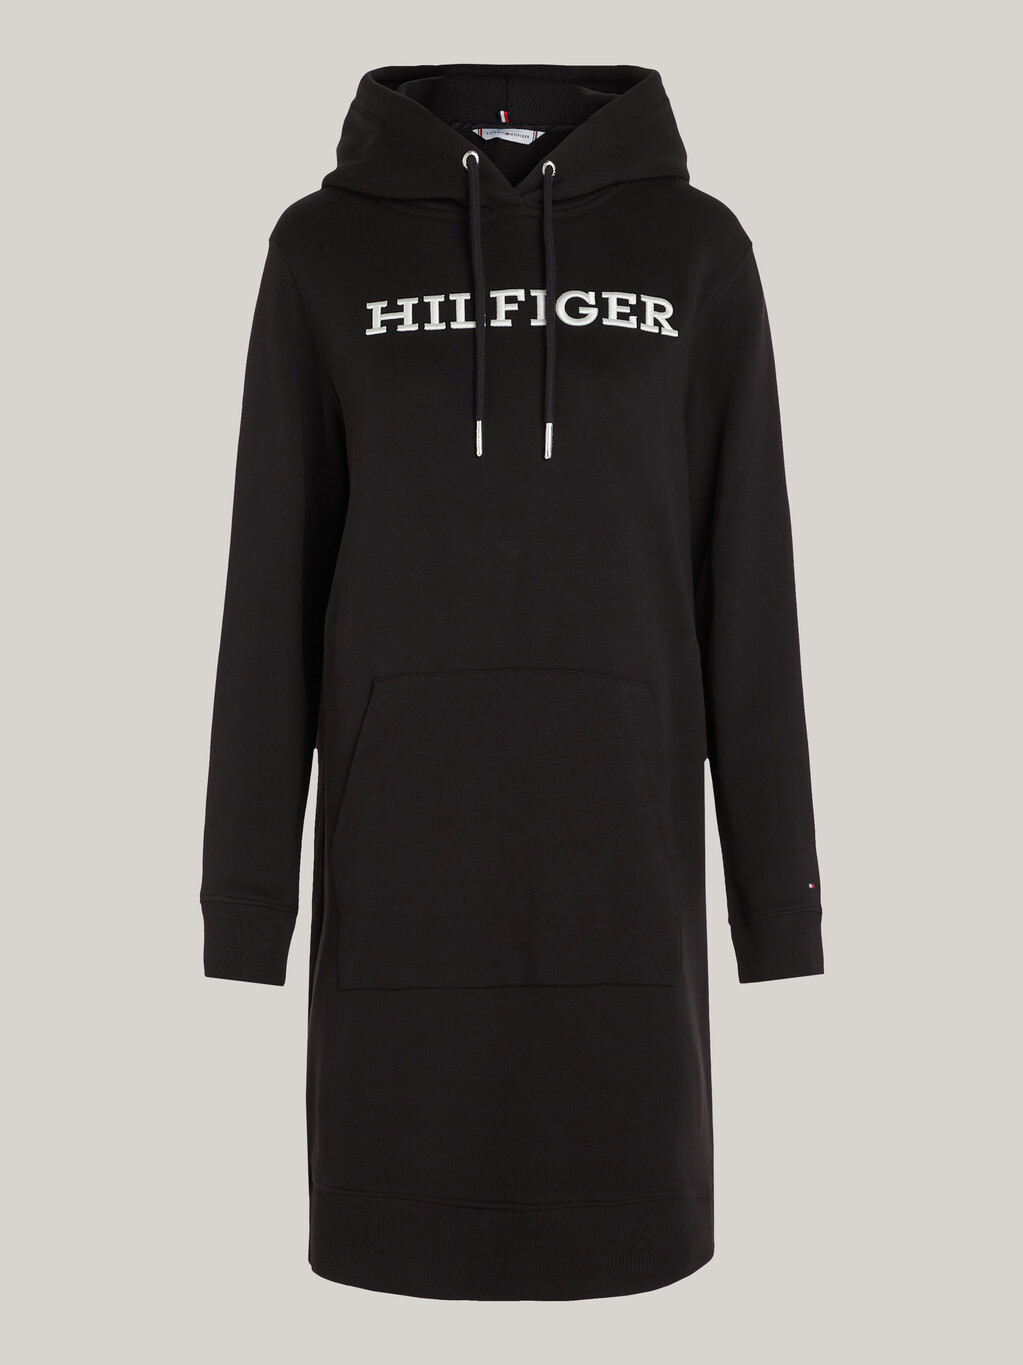 Hilfiger Monotype Logo Embroidery Hoody Dress, Black, hi-res